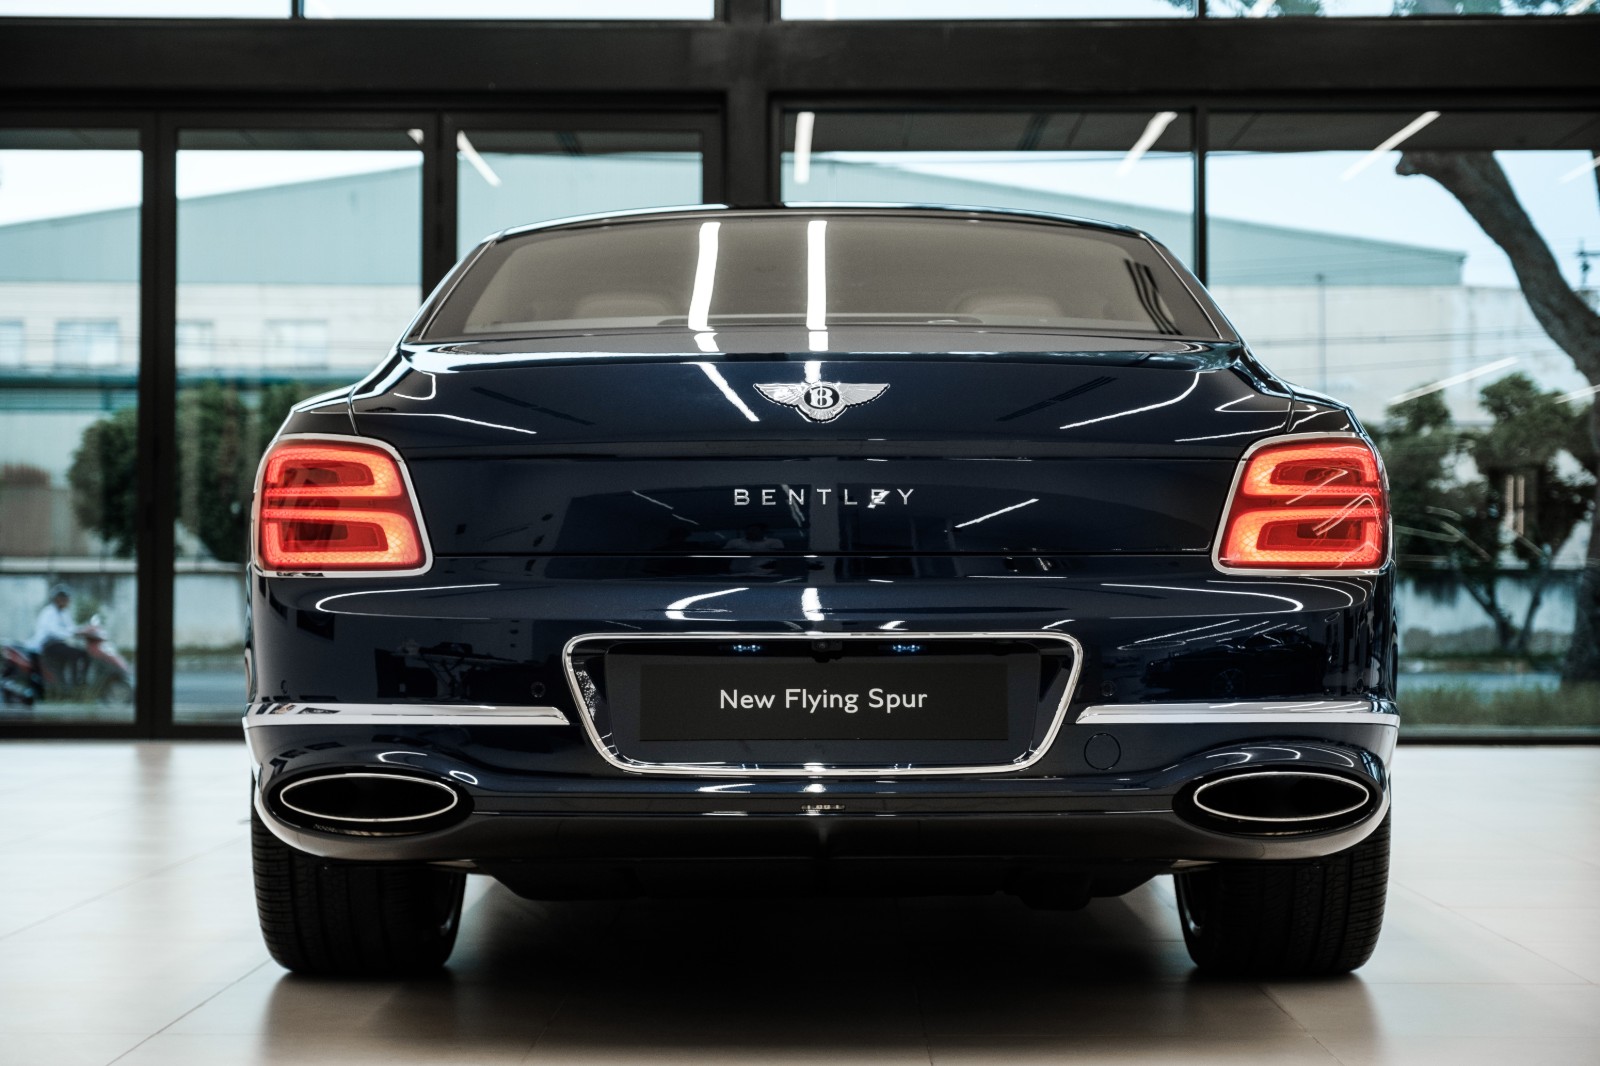 Xe hơi,Bentley Việt Nam, Bentley, Bentley New Flying Spur, Sedan, WOWWEEKEND, Lifestyle, Ô tô